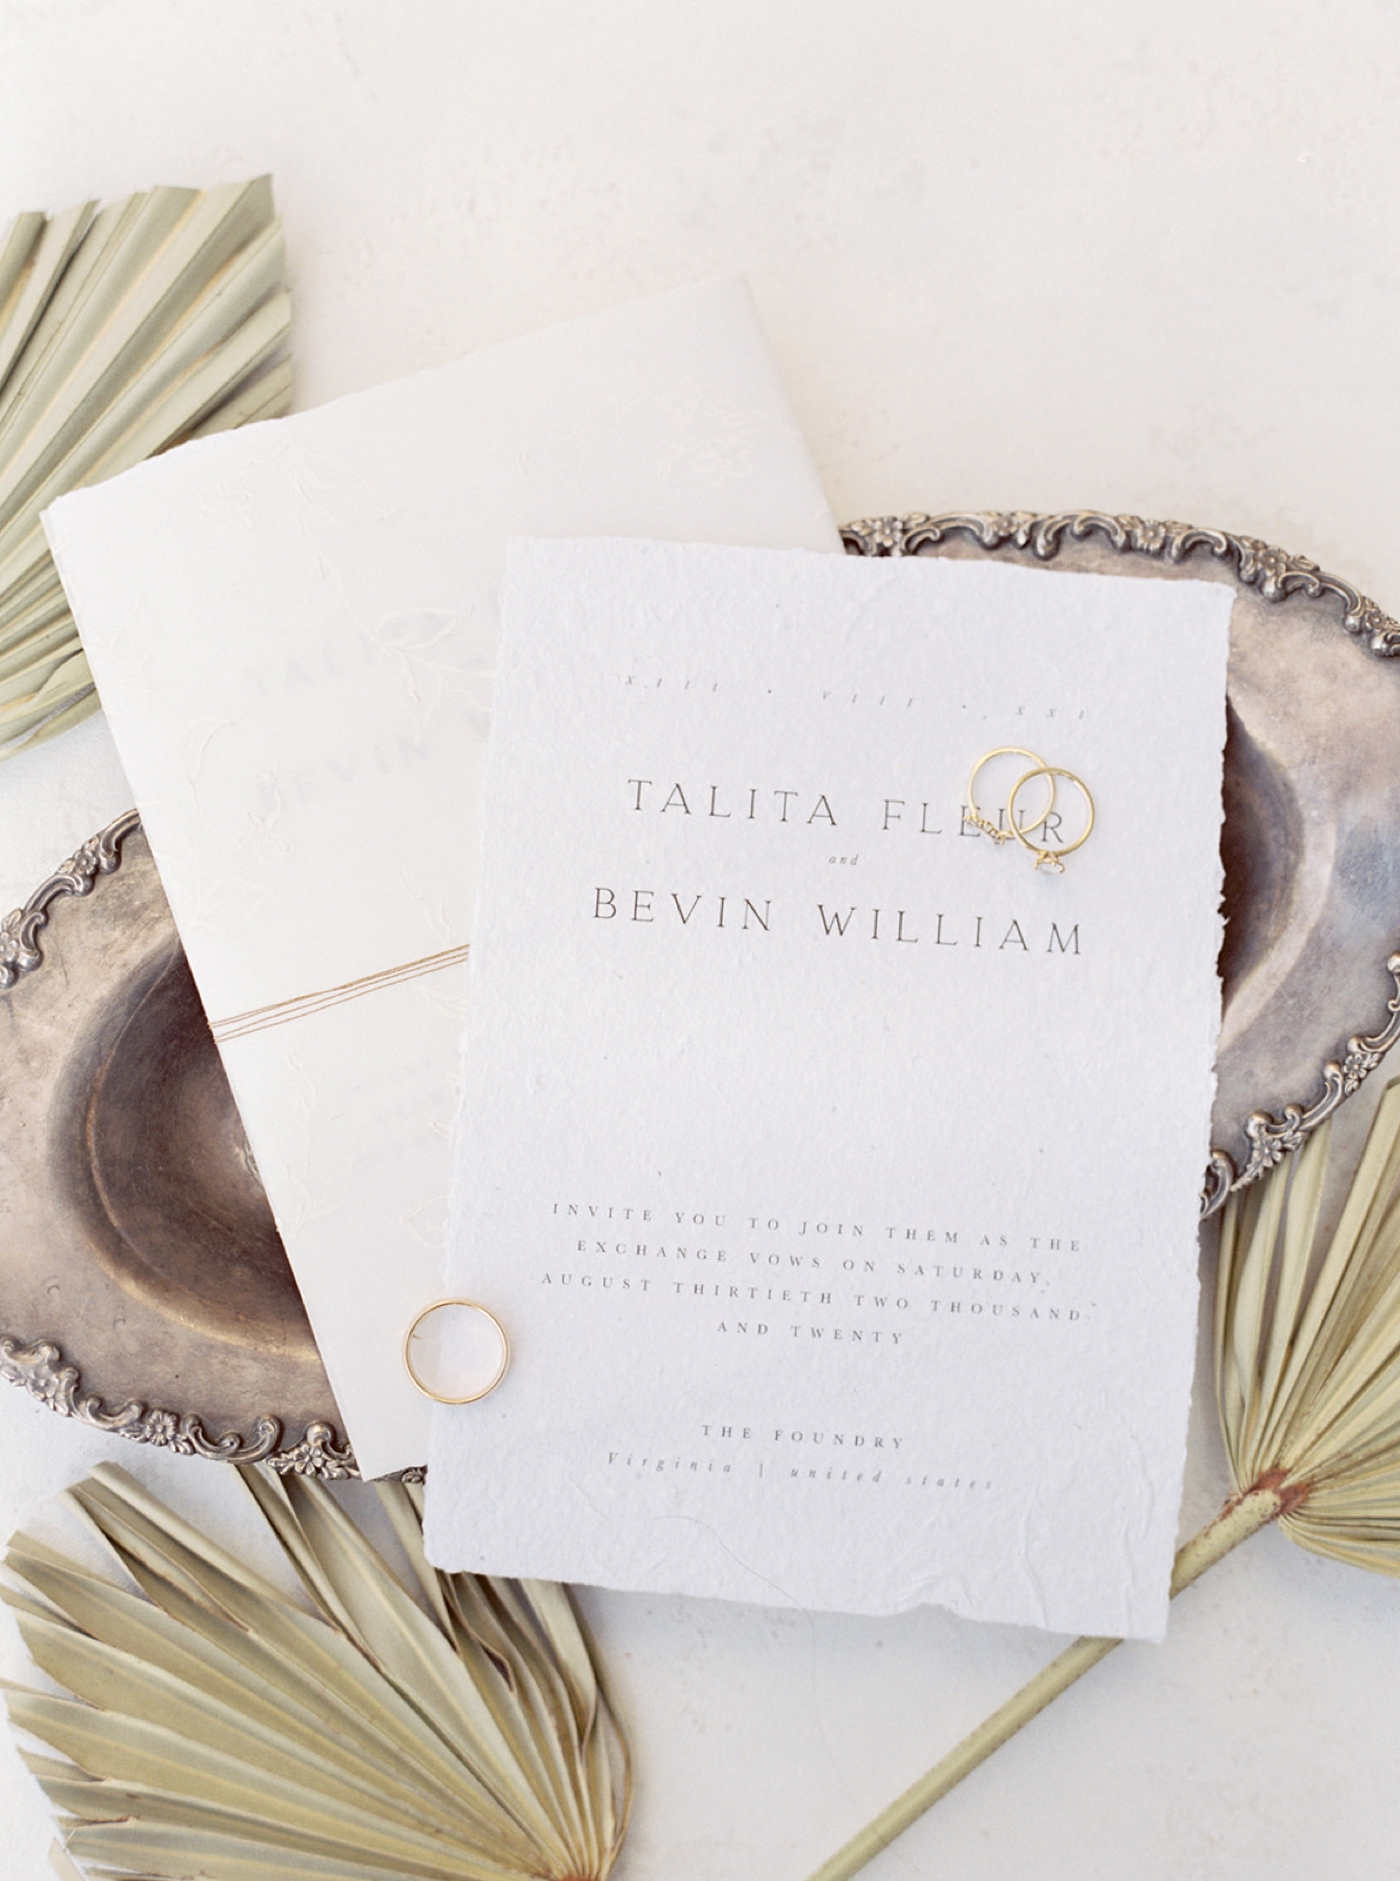 Classic handmade wedding invitations by Papier Handmade